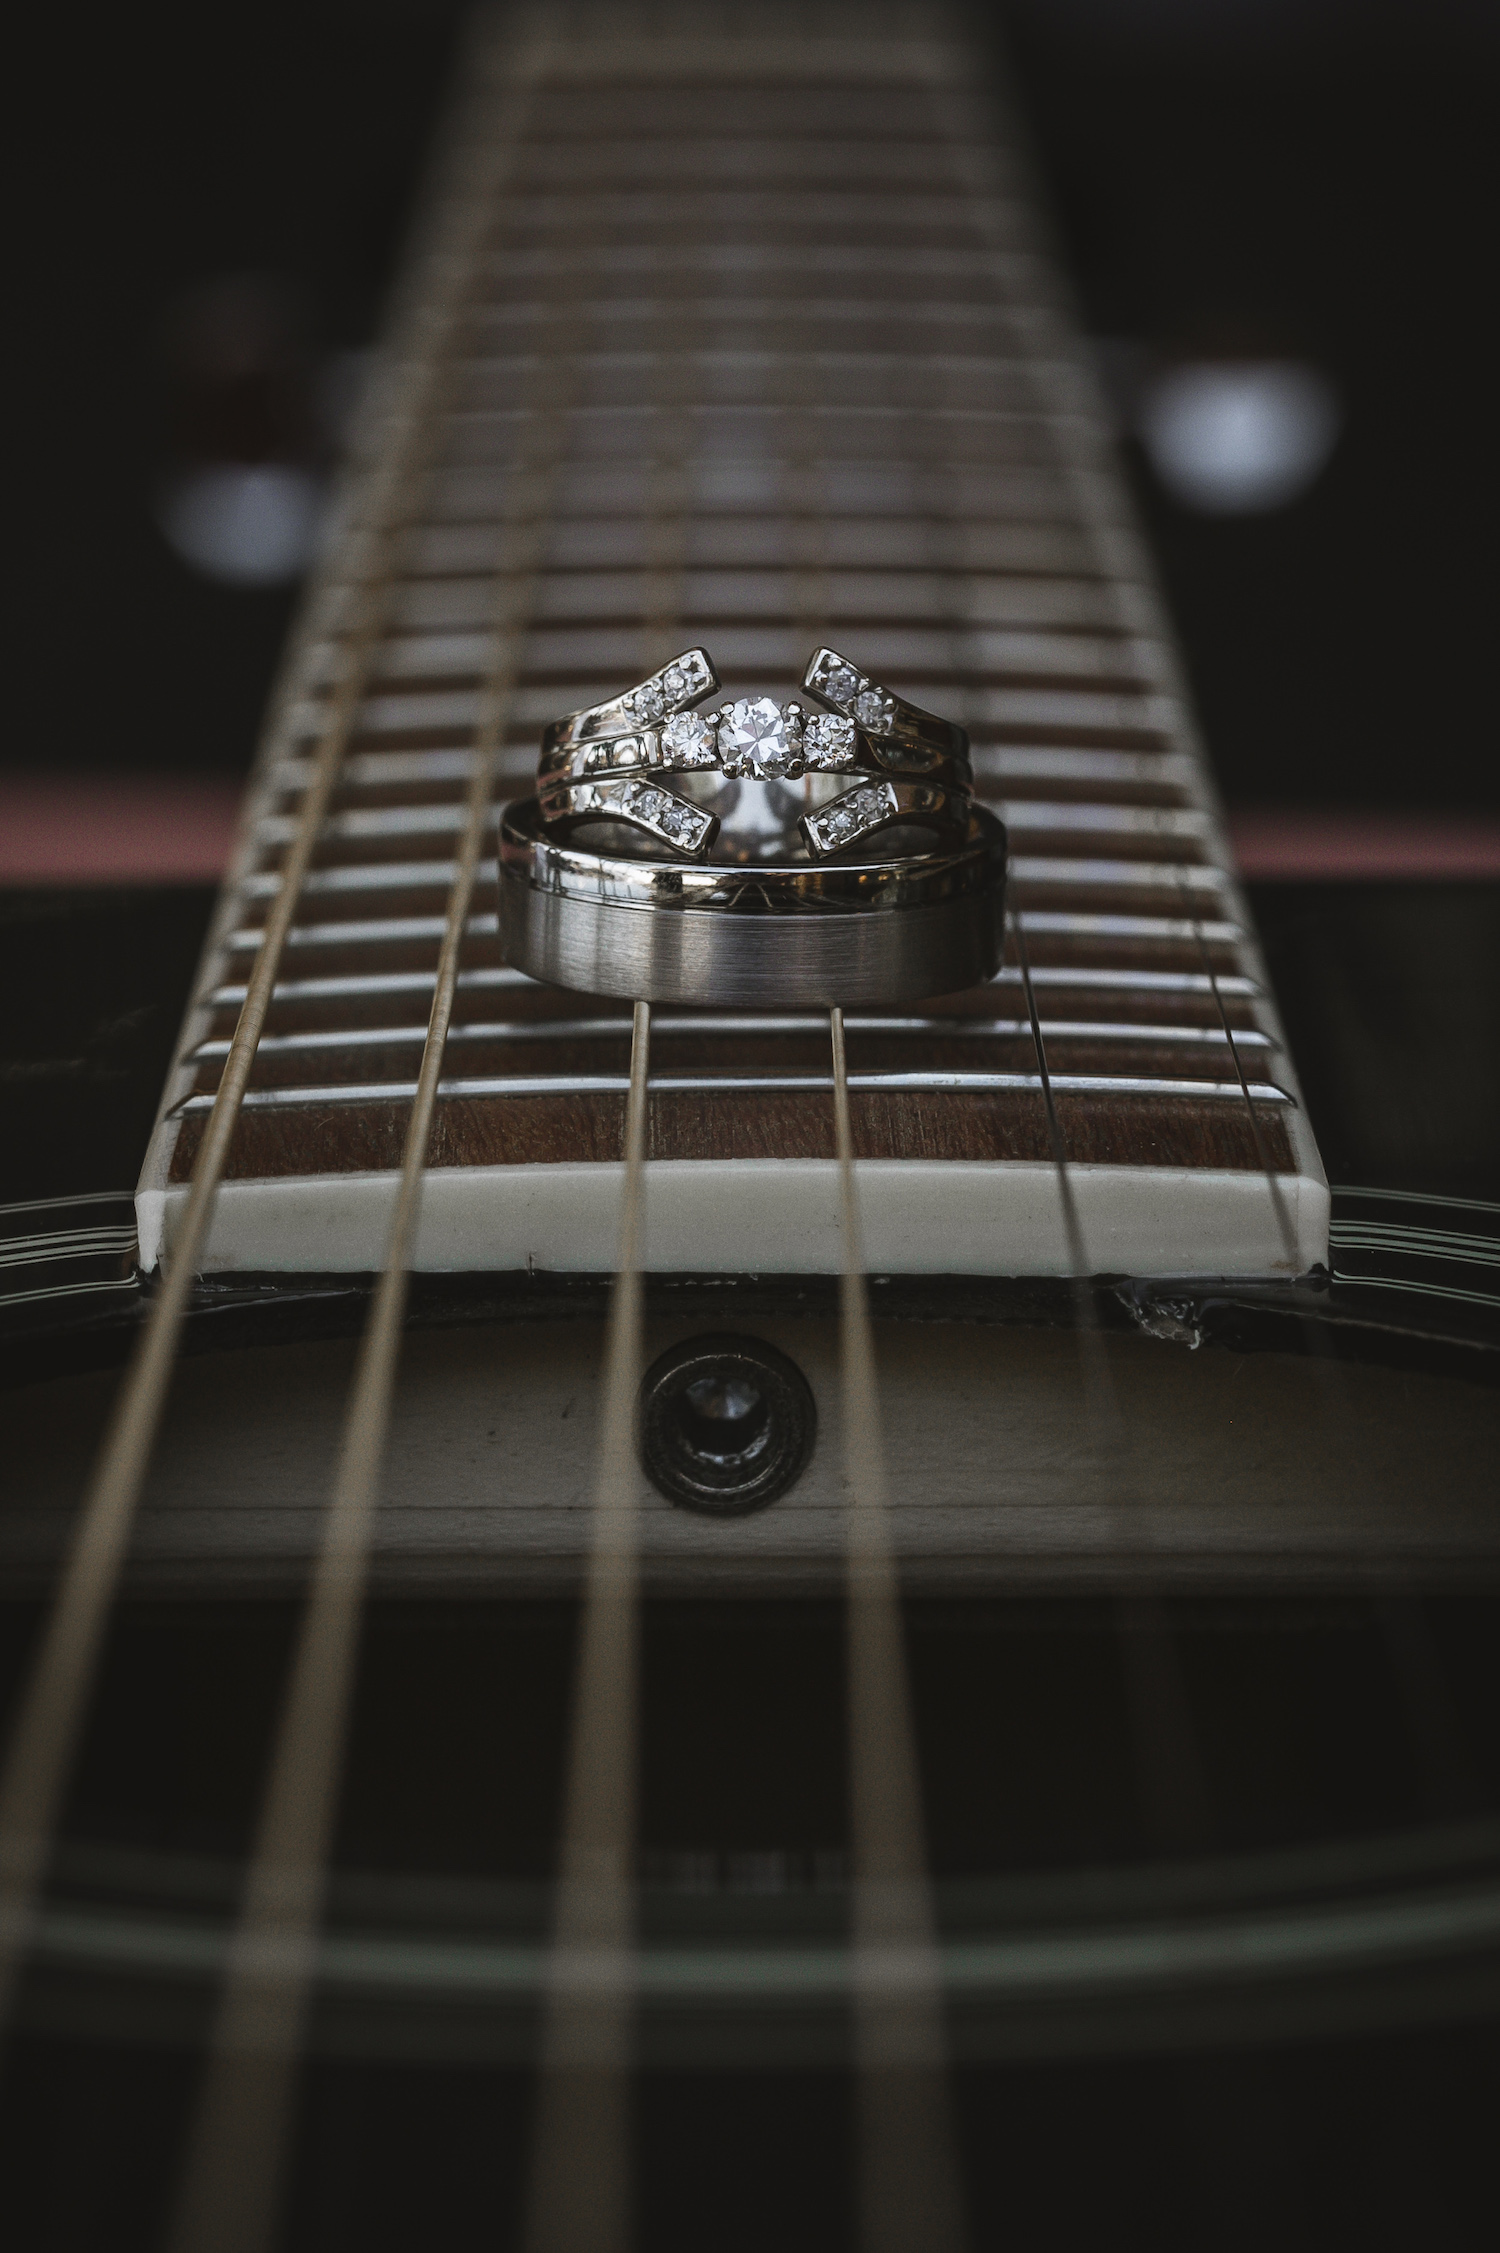 Rings laying on guitar strings